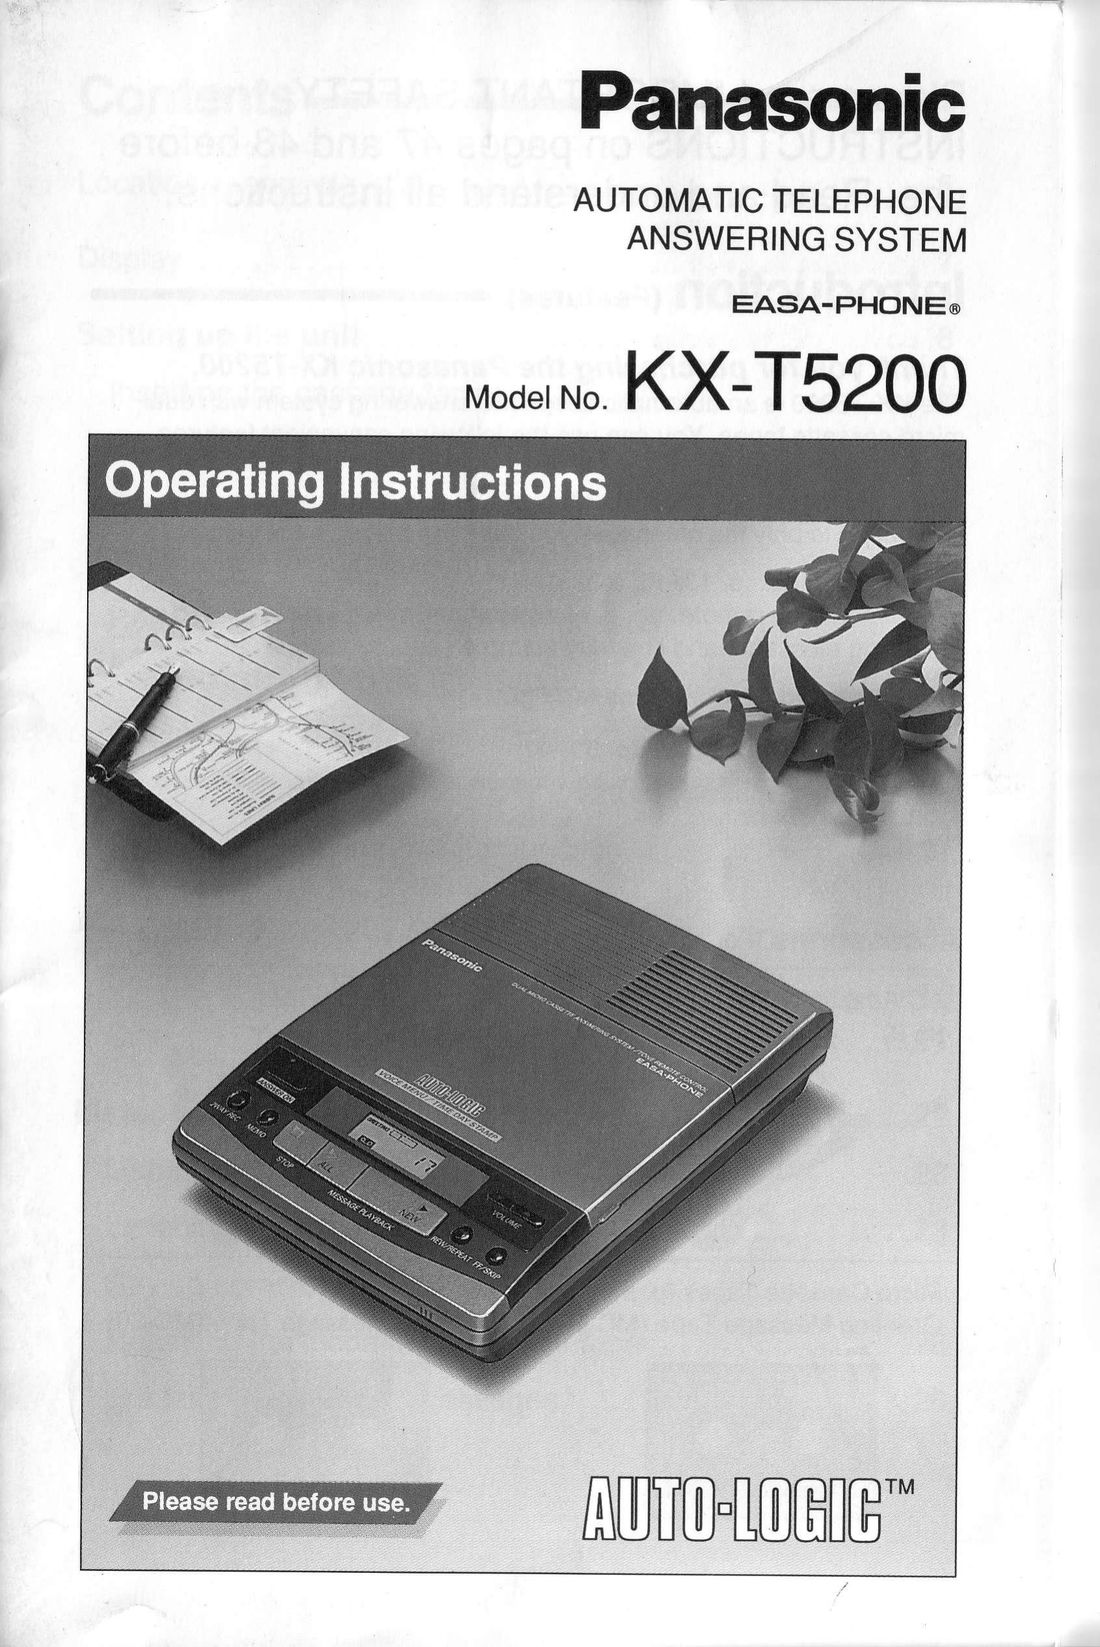 Panasonic KX-T5200 Answering Machine User Manual